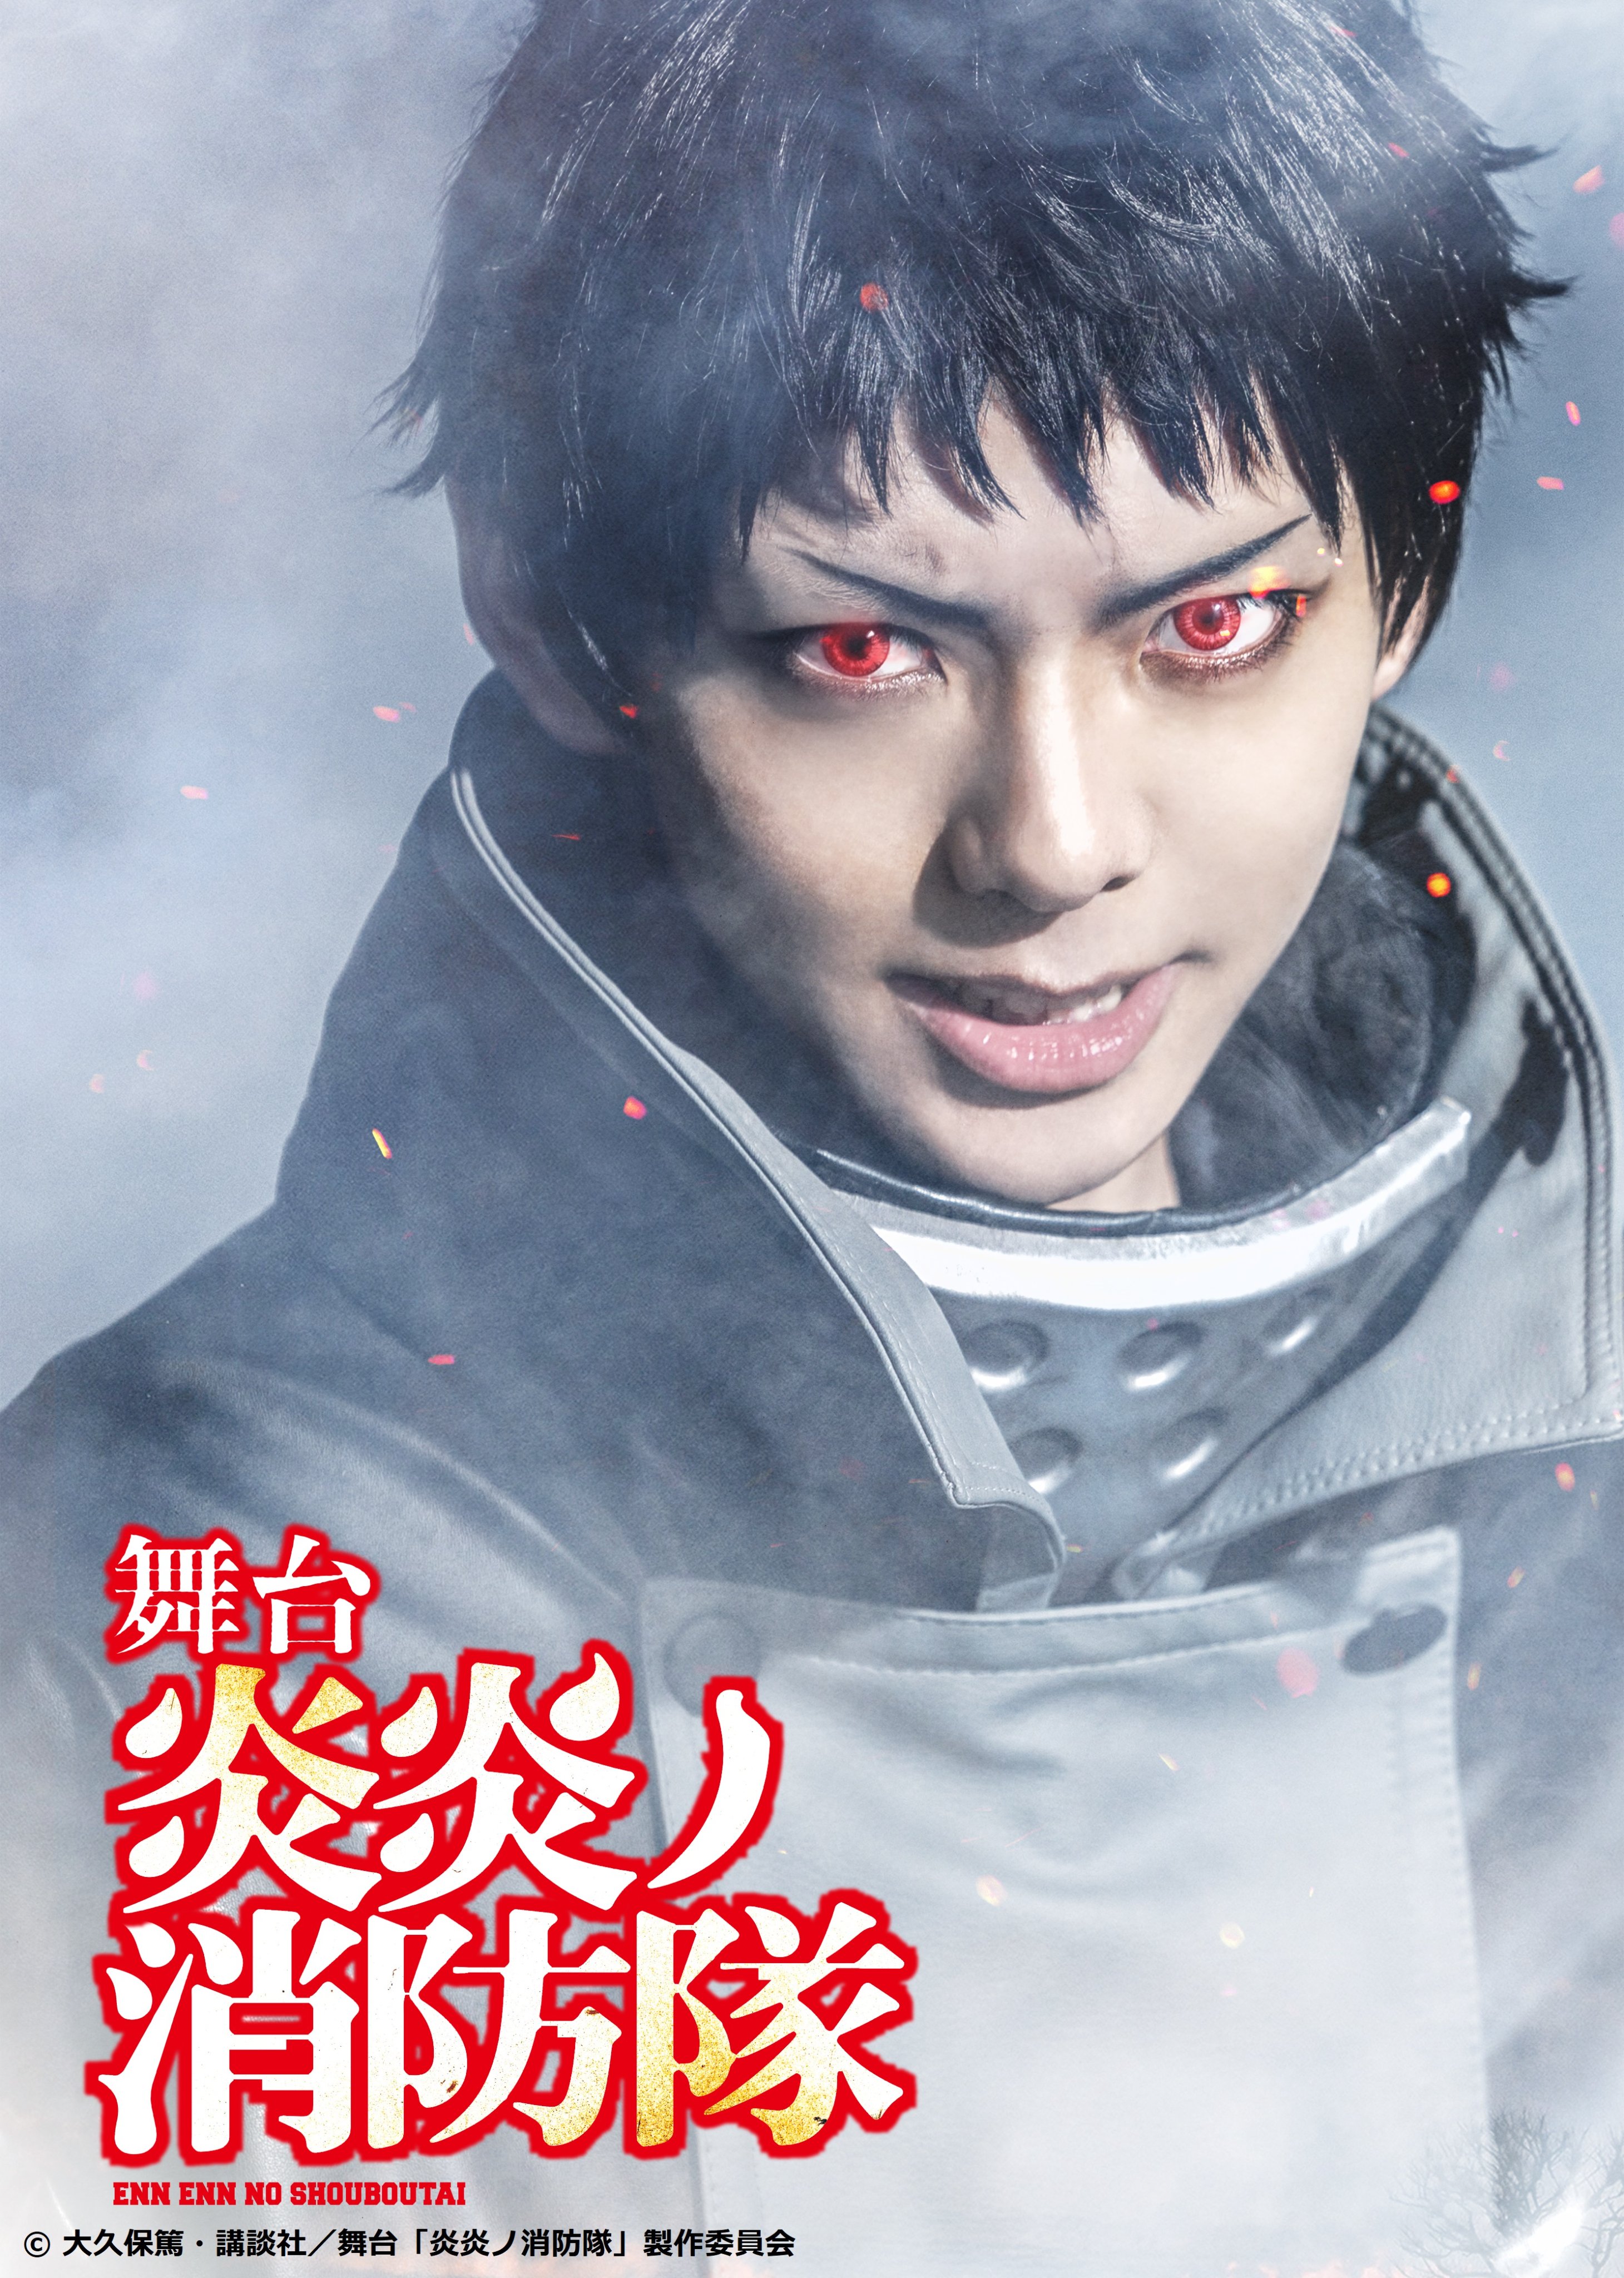 Ryoga Ishikawa looks fierce as Shinra in Fire Force 3rd stage play teaser visual